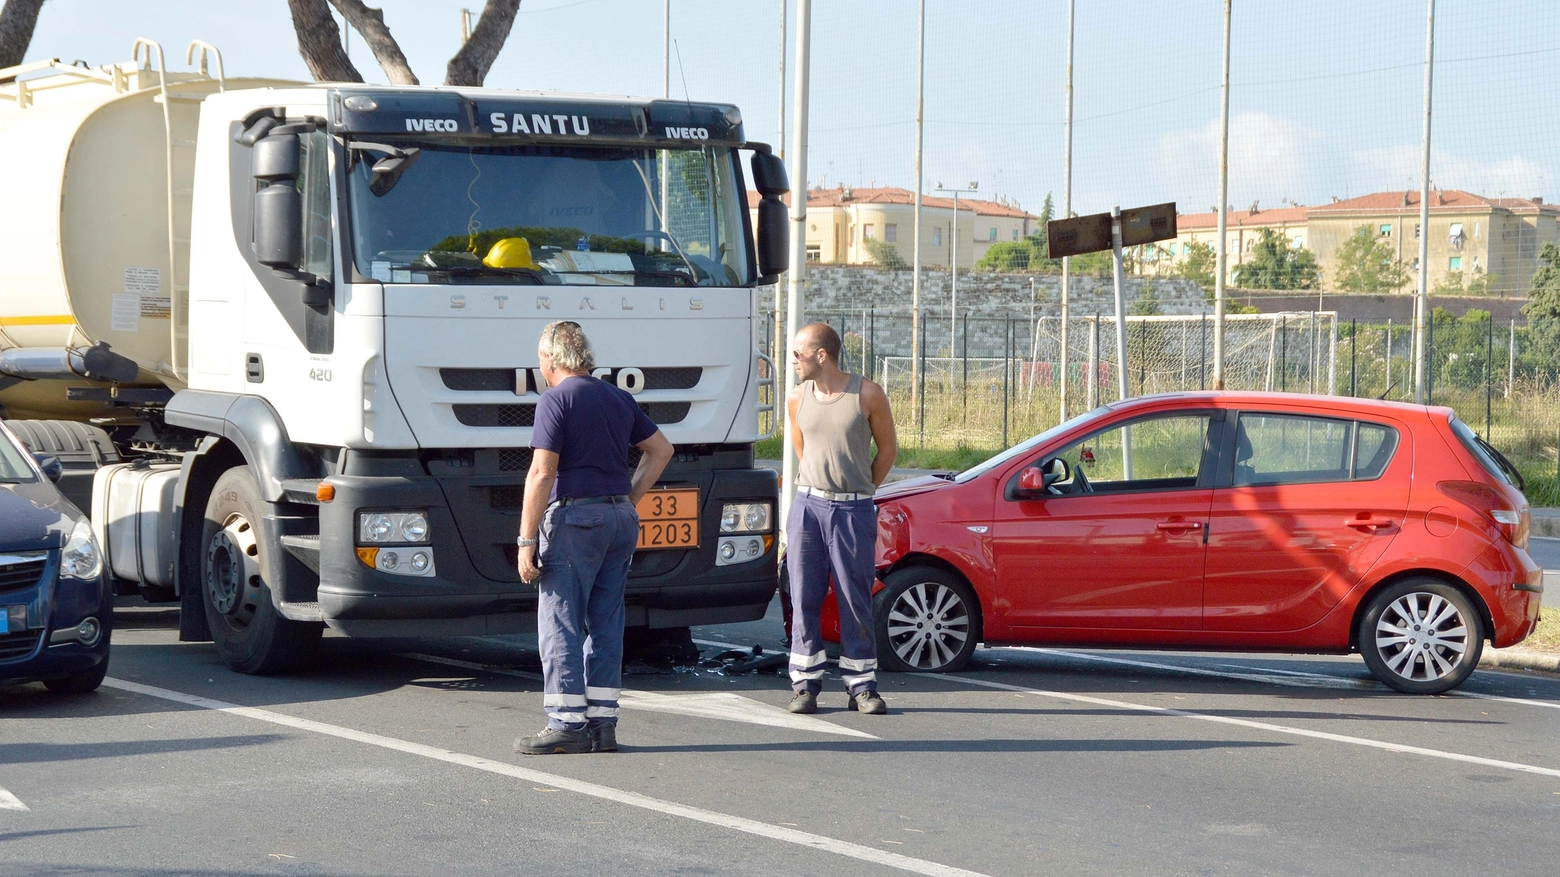 Incidente in via Mastacchi, auto finisce contro un camion (Lanari)